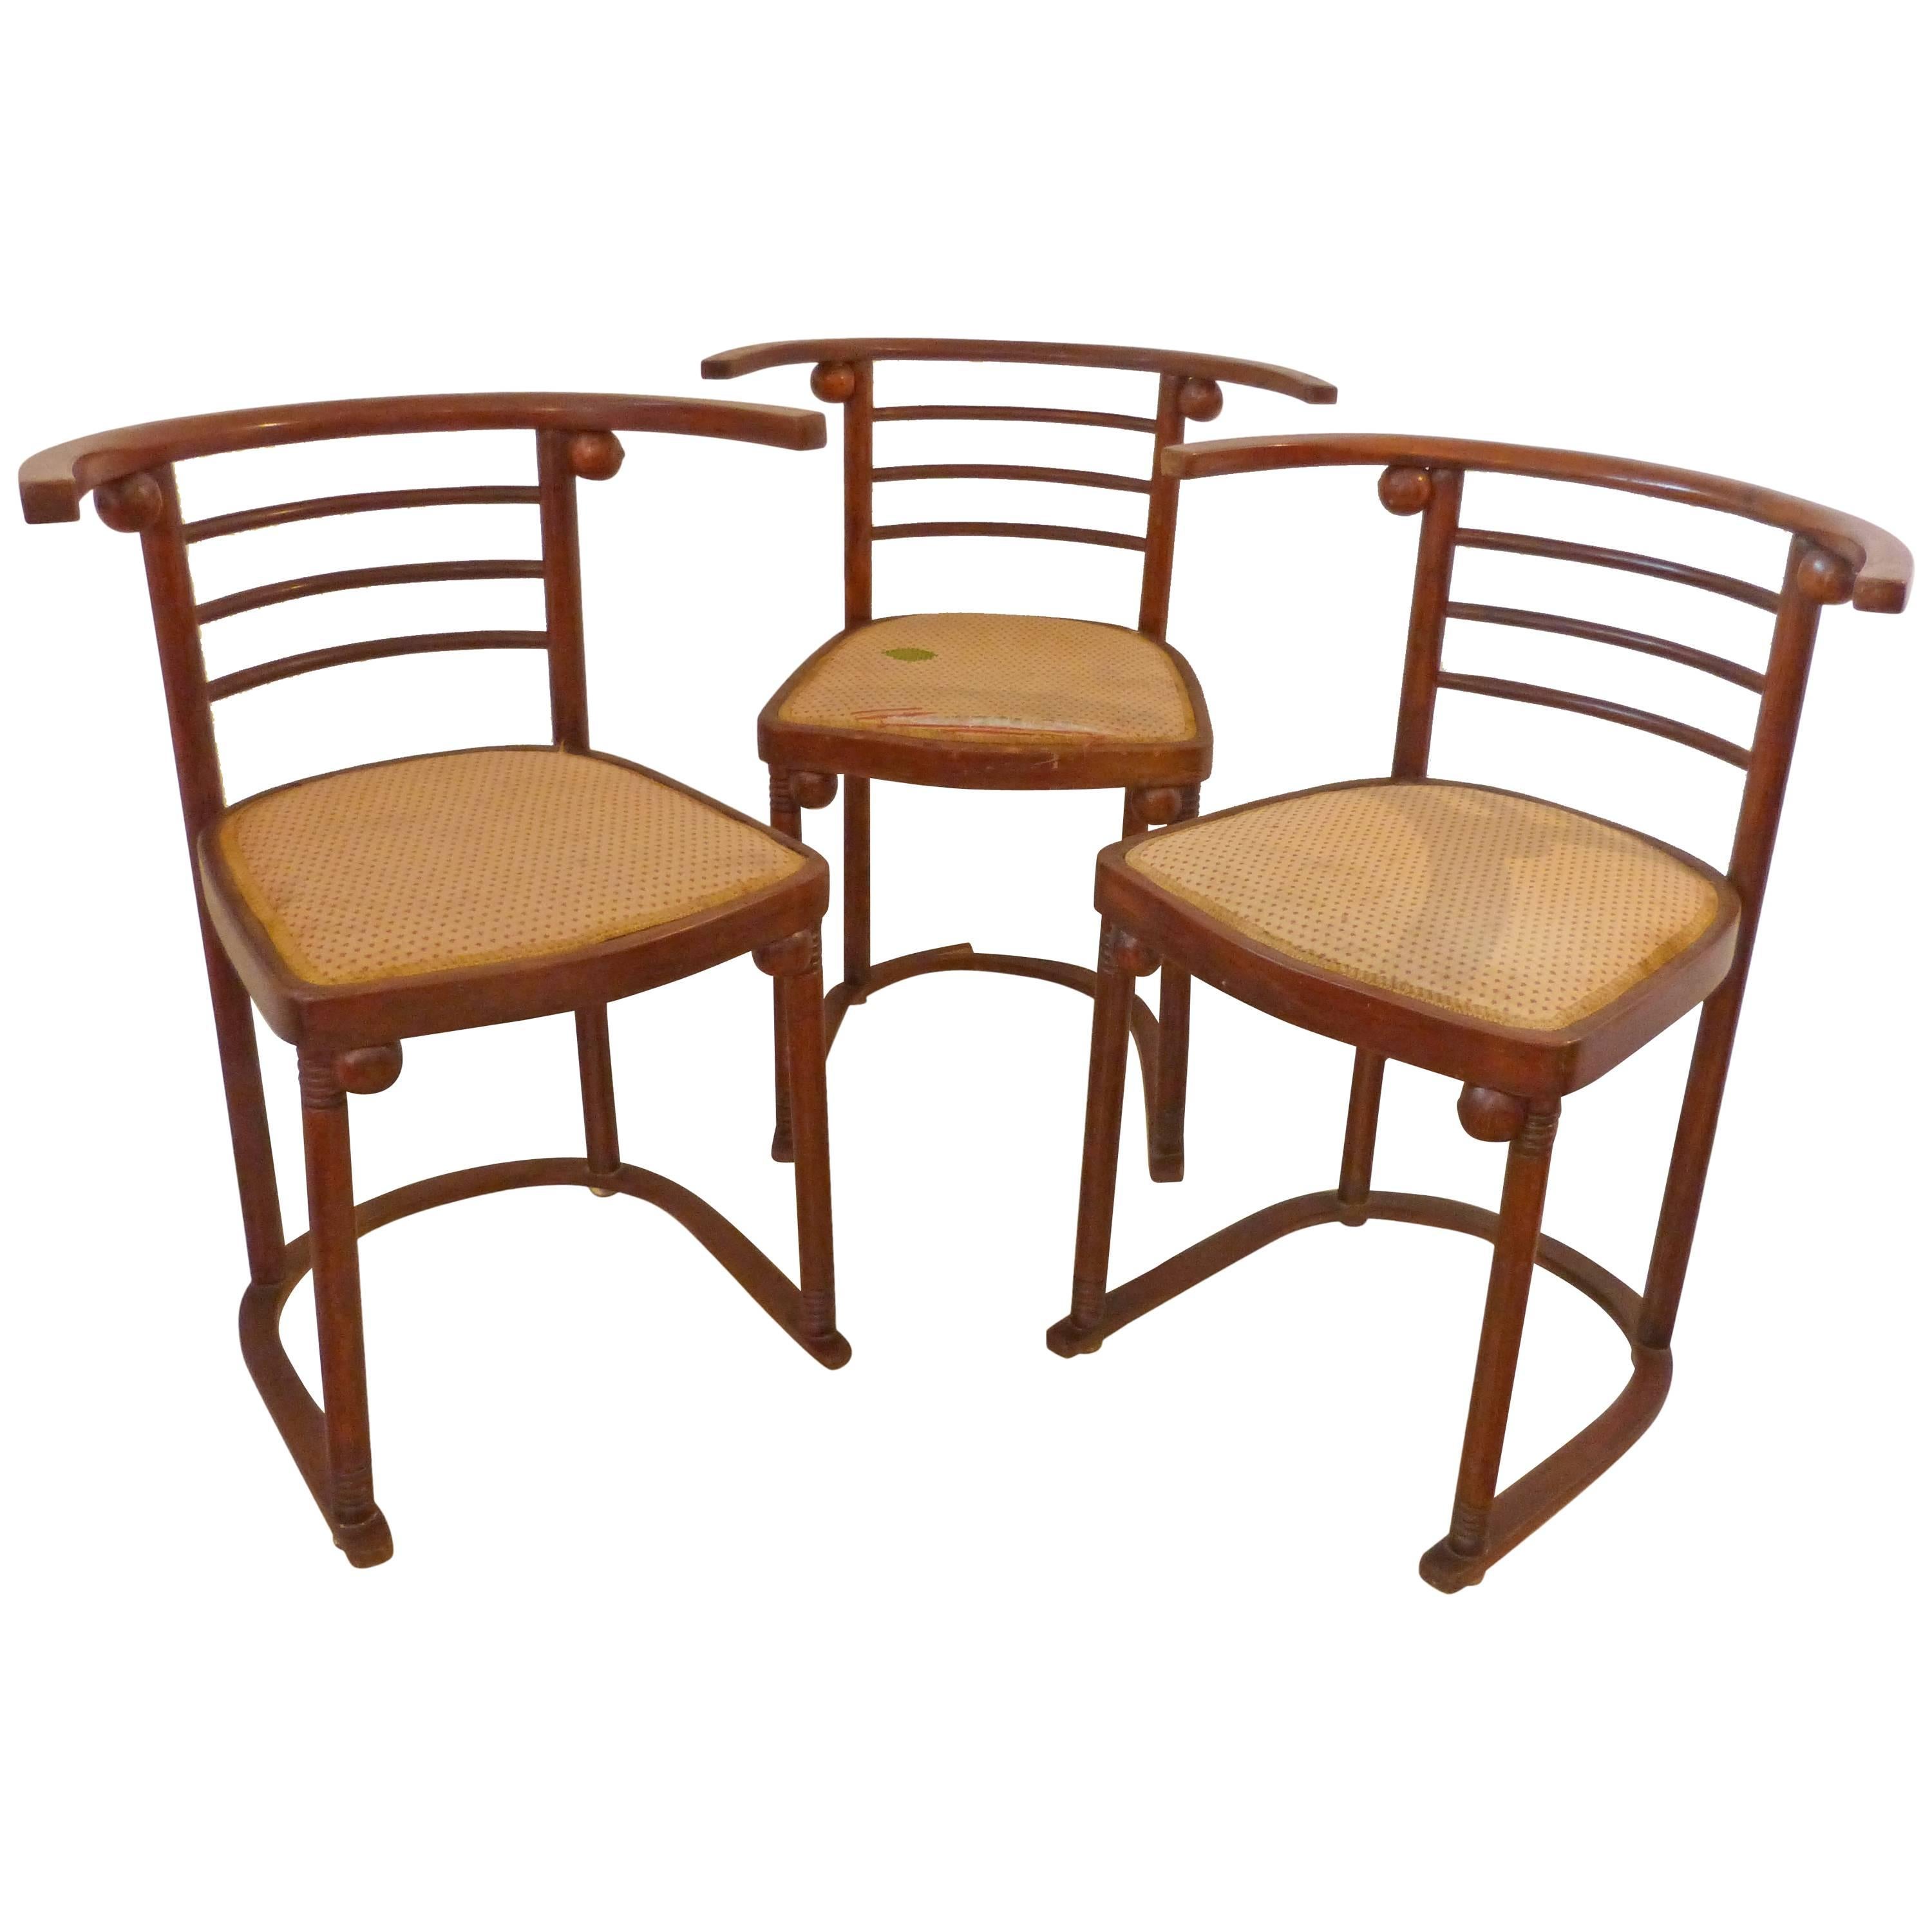 Set of Three Fledermauss Chairs by Josef Hoffmann 1905